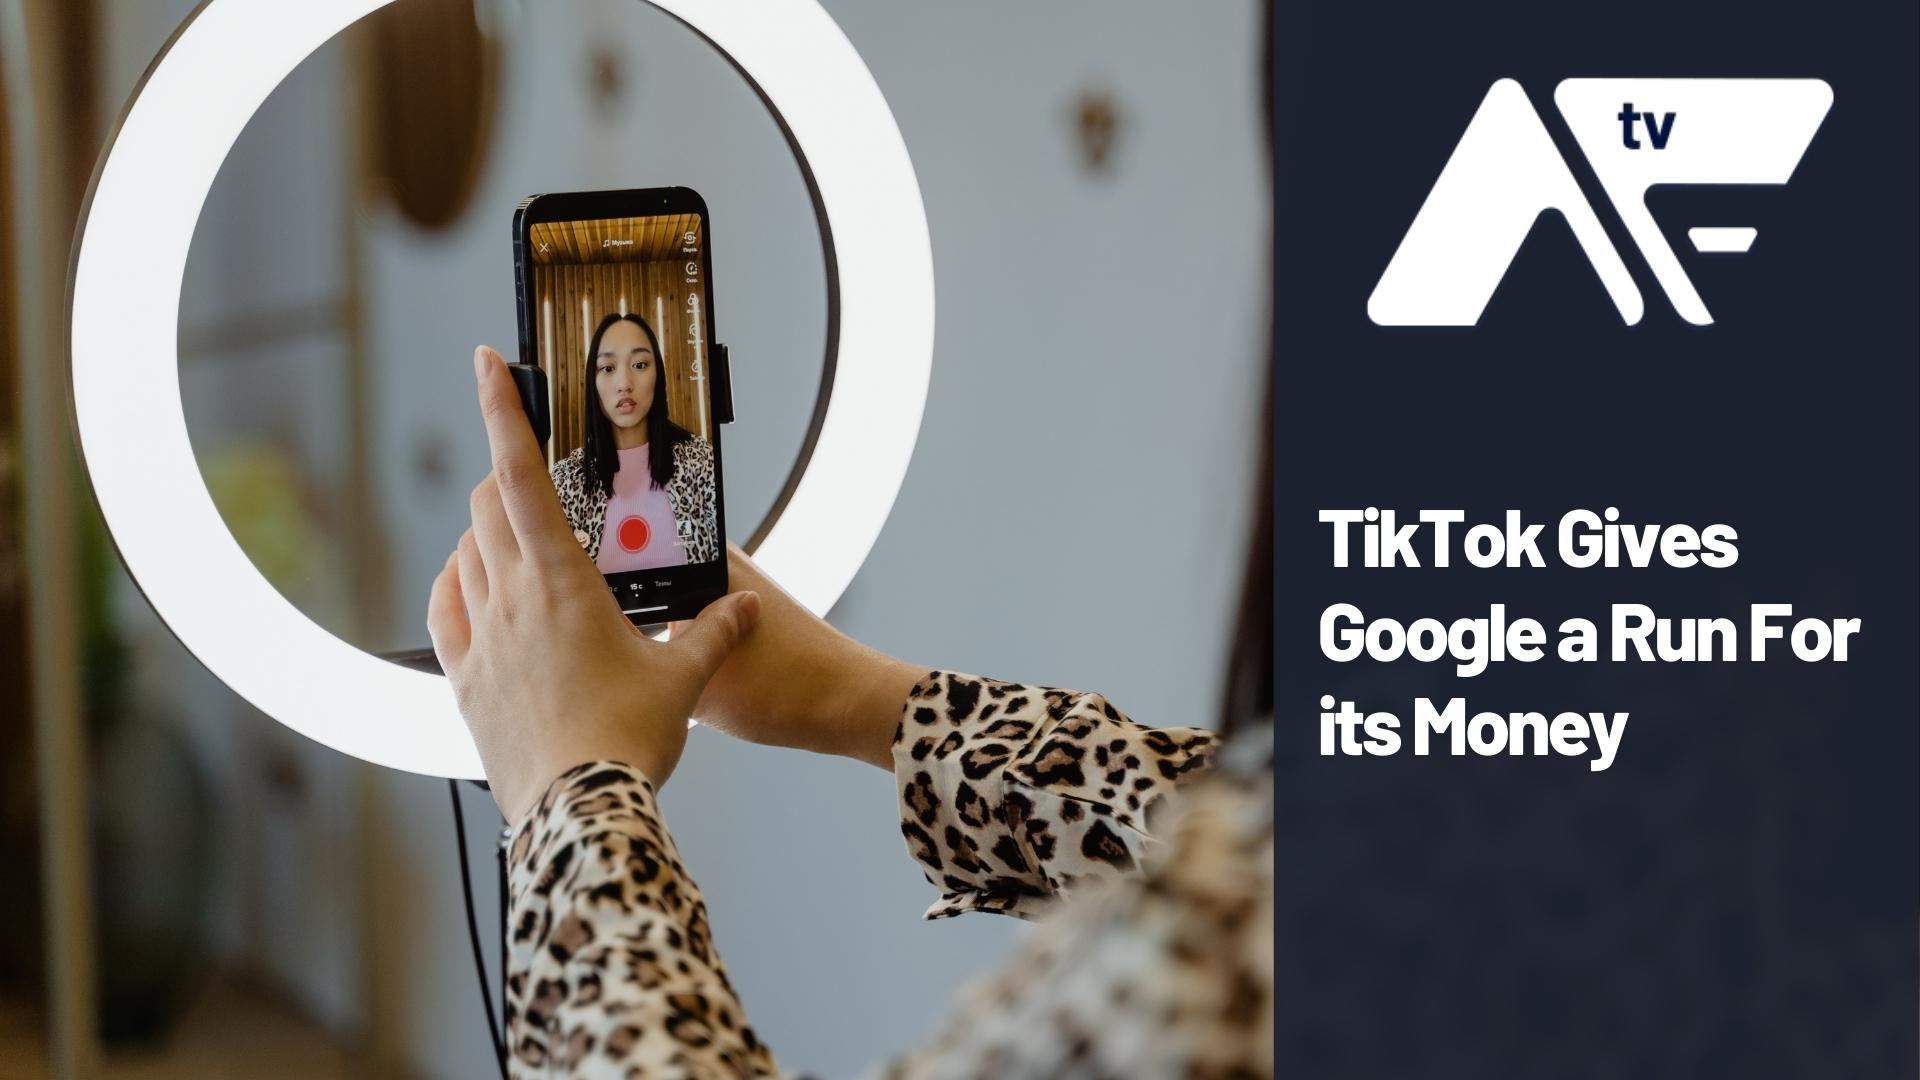 AF TV – TikTok Gives Google a Run For its Money